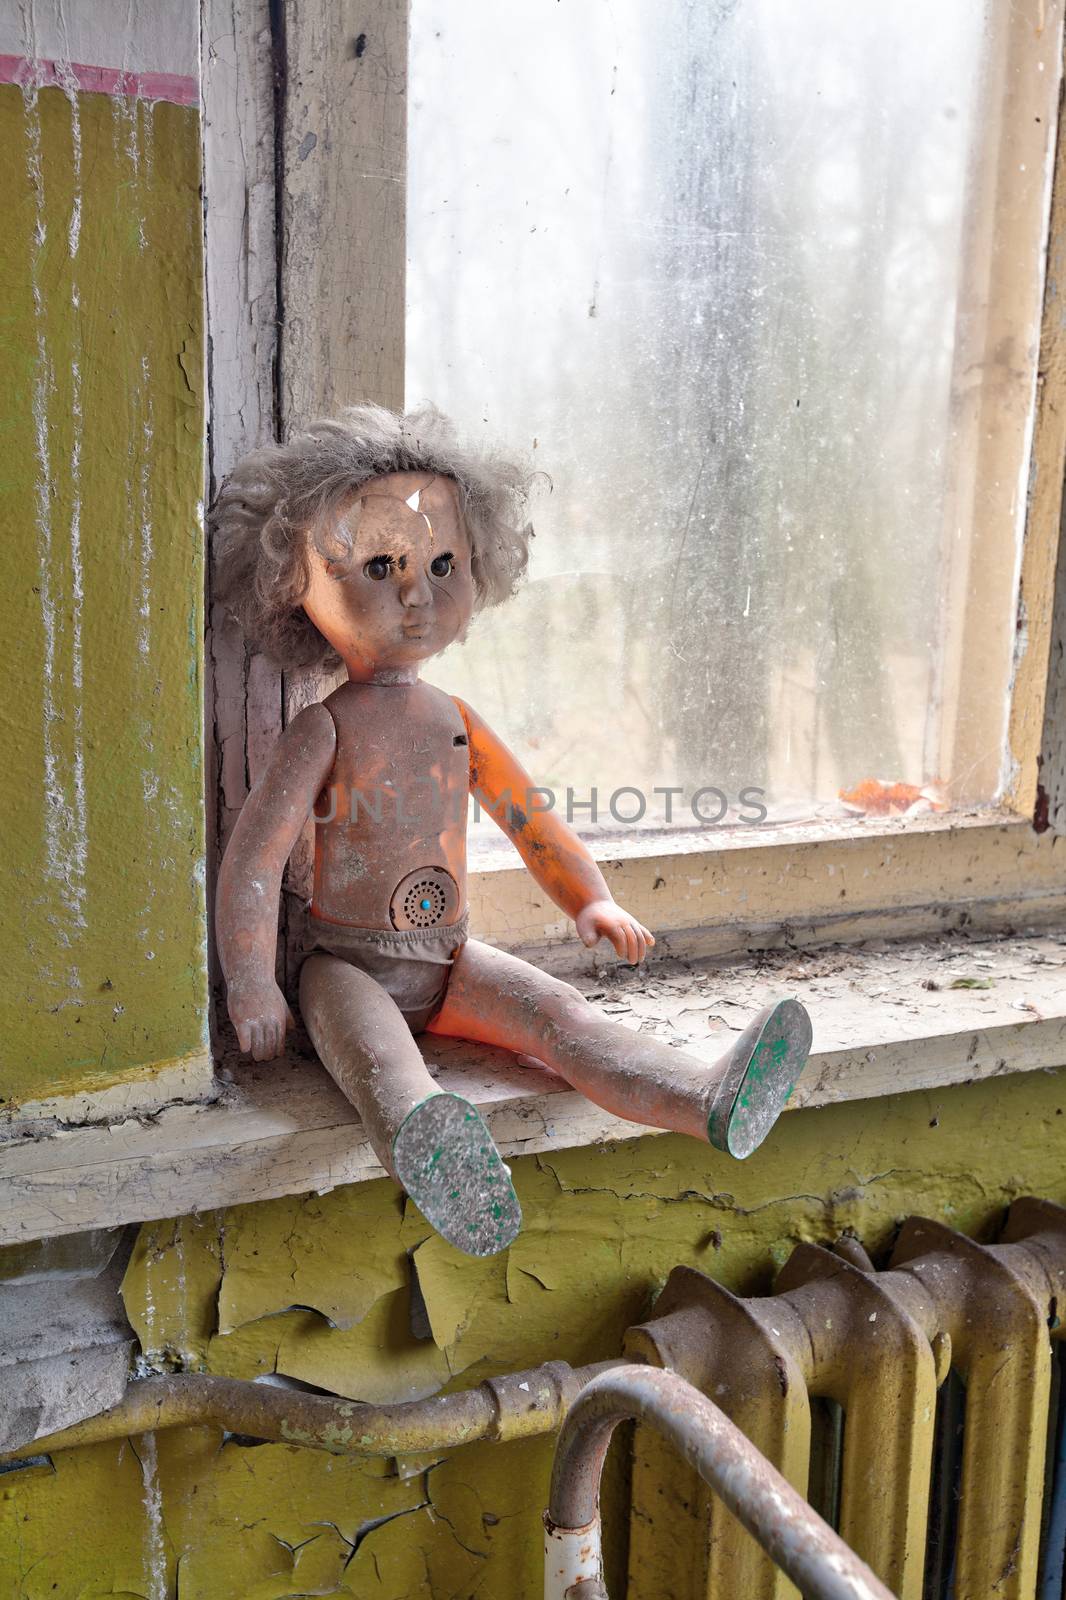 Radioactive doll in Chernobyl kindergarten by igor_stramyk